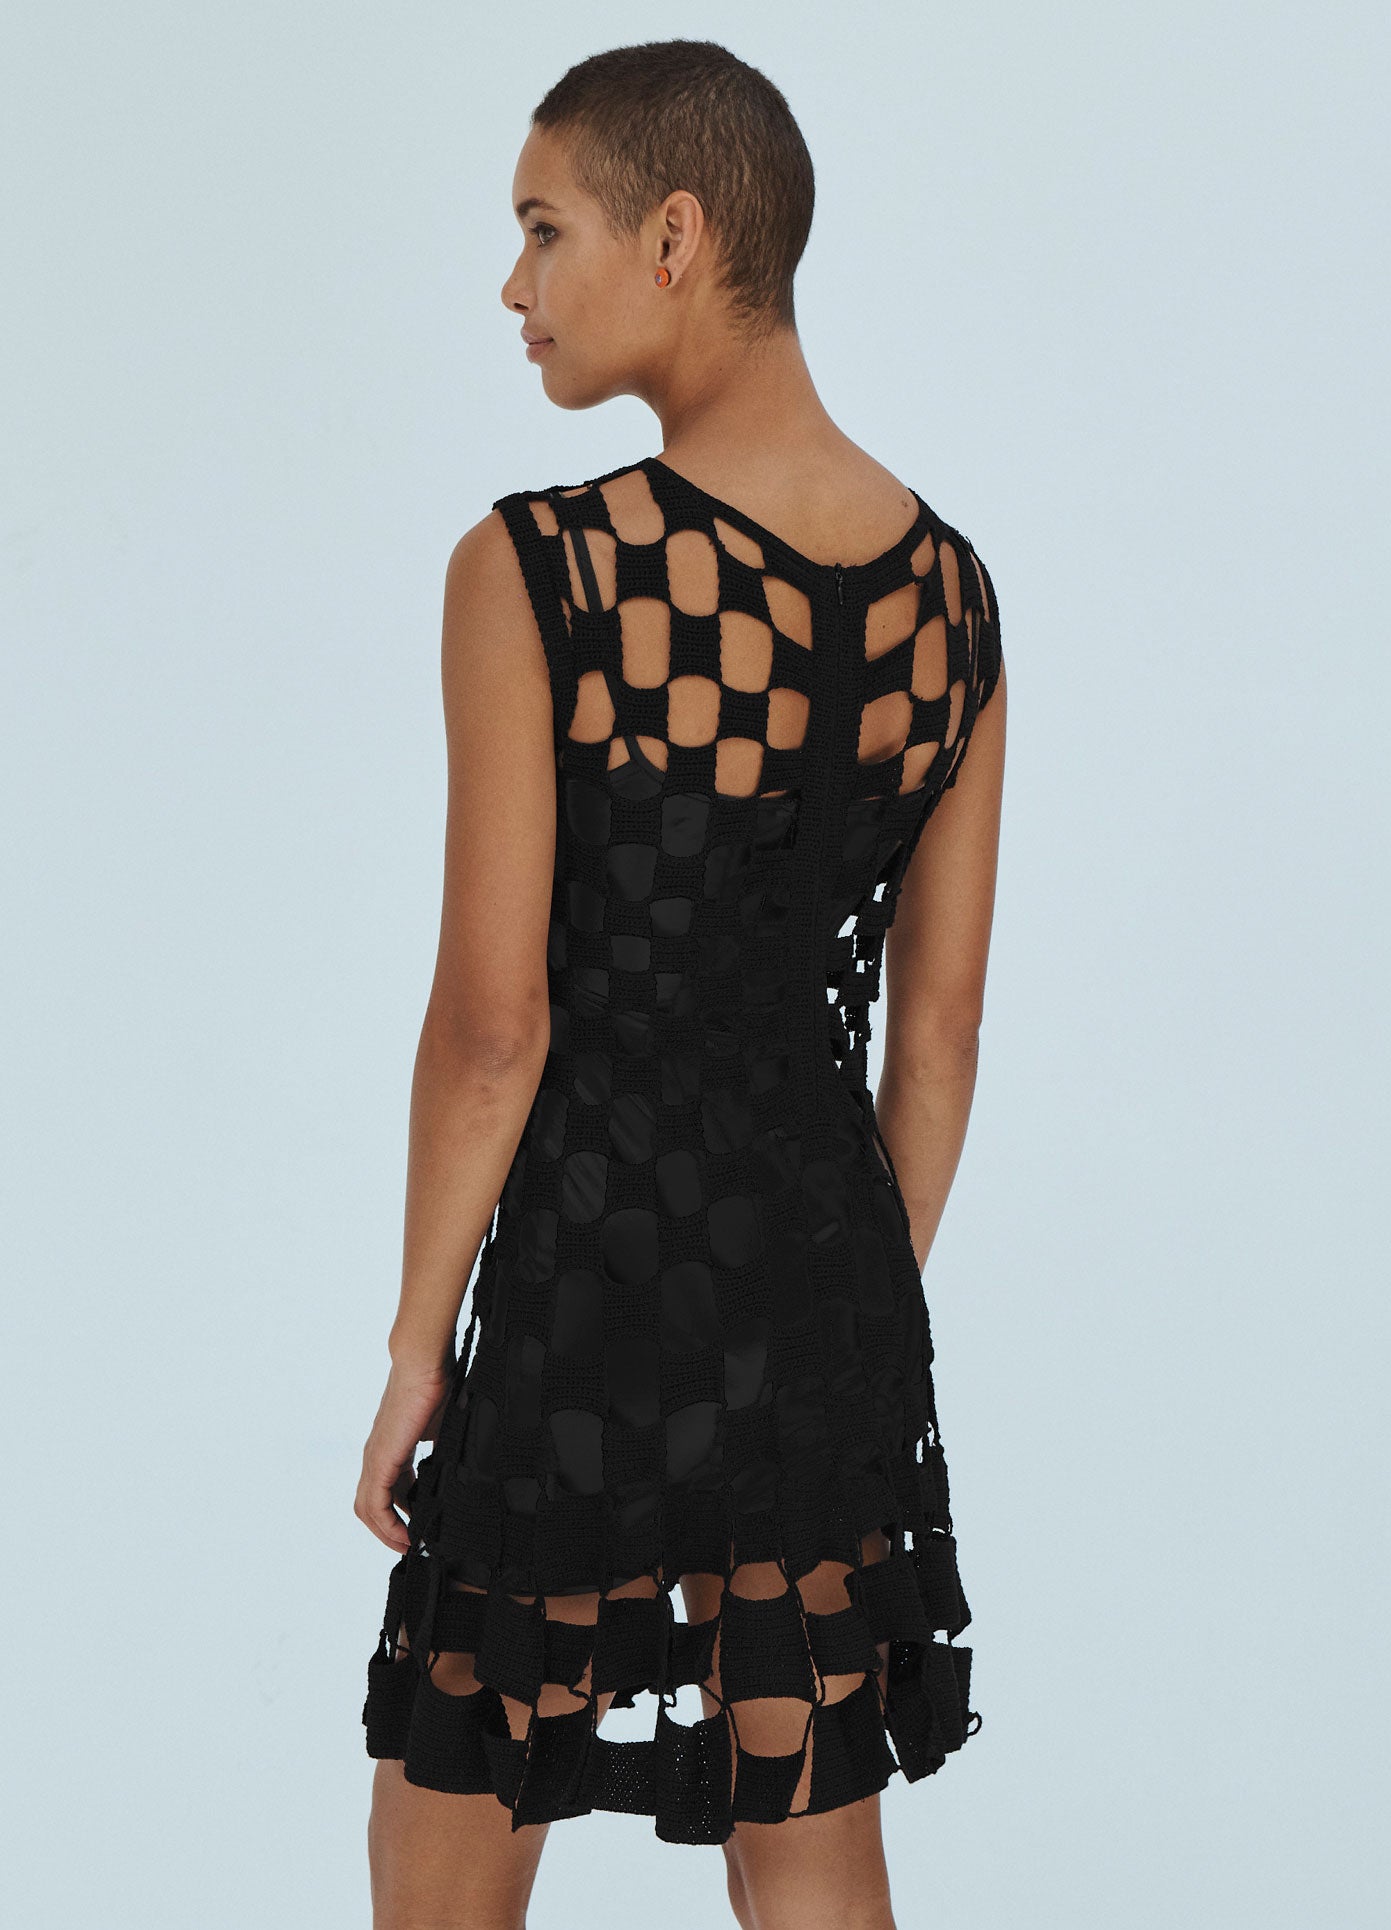 MONSE Square Crochet Mini Dress in Black on model back view